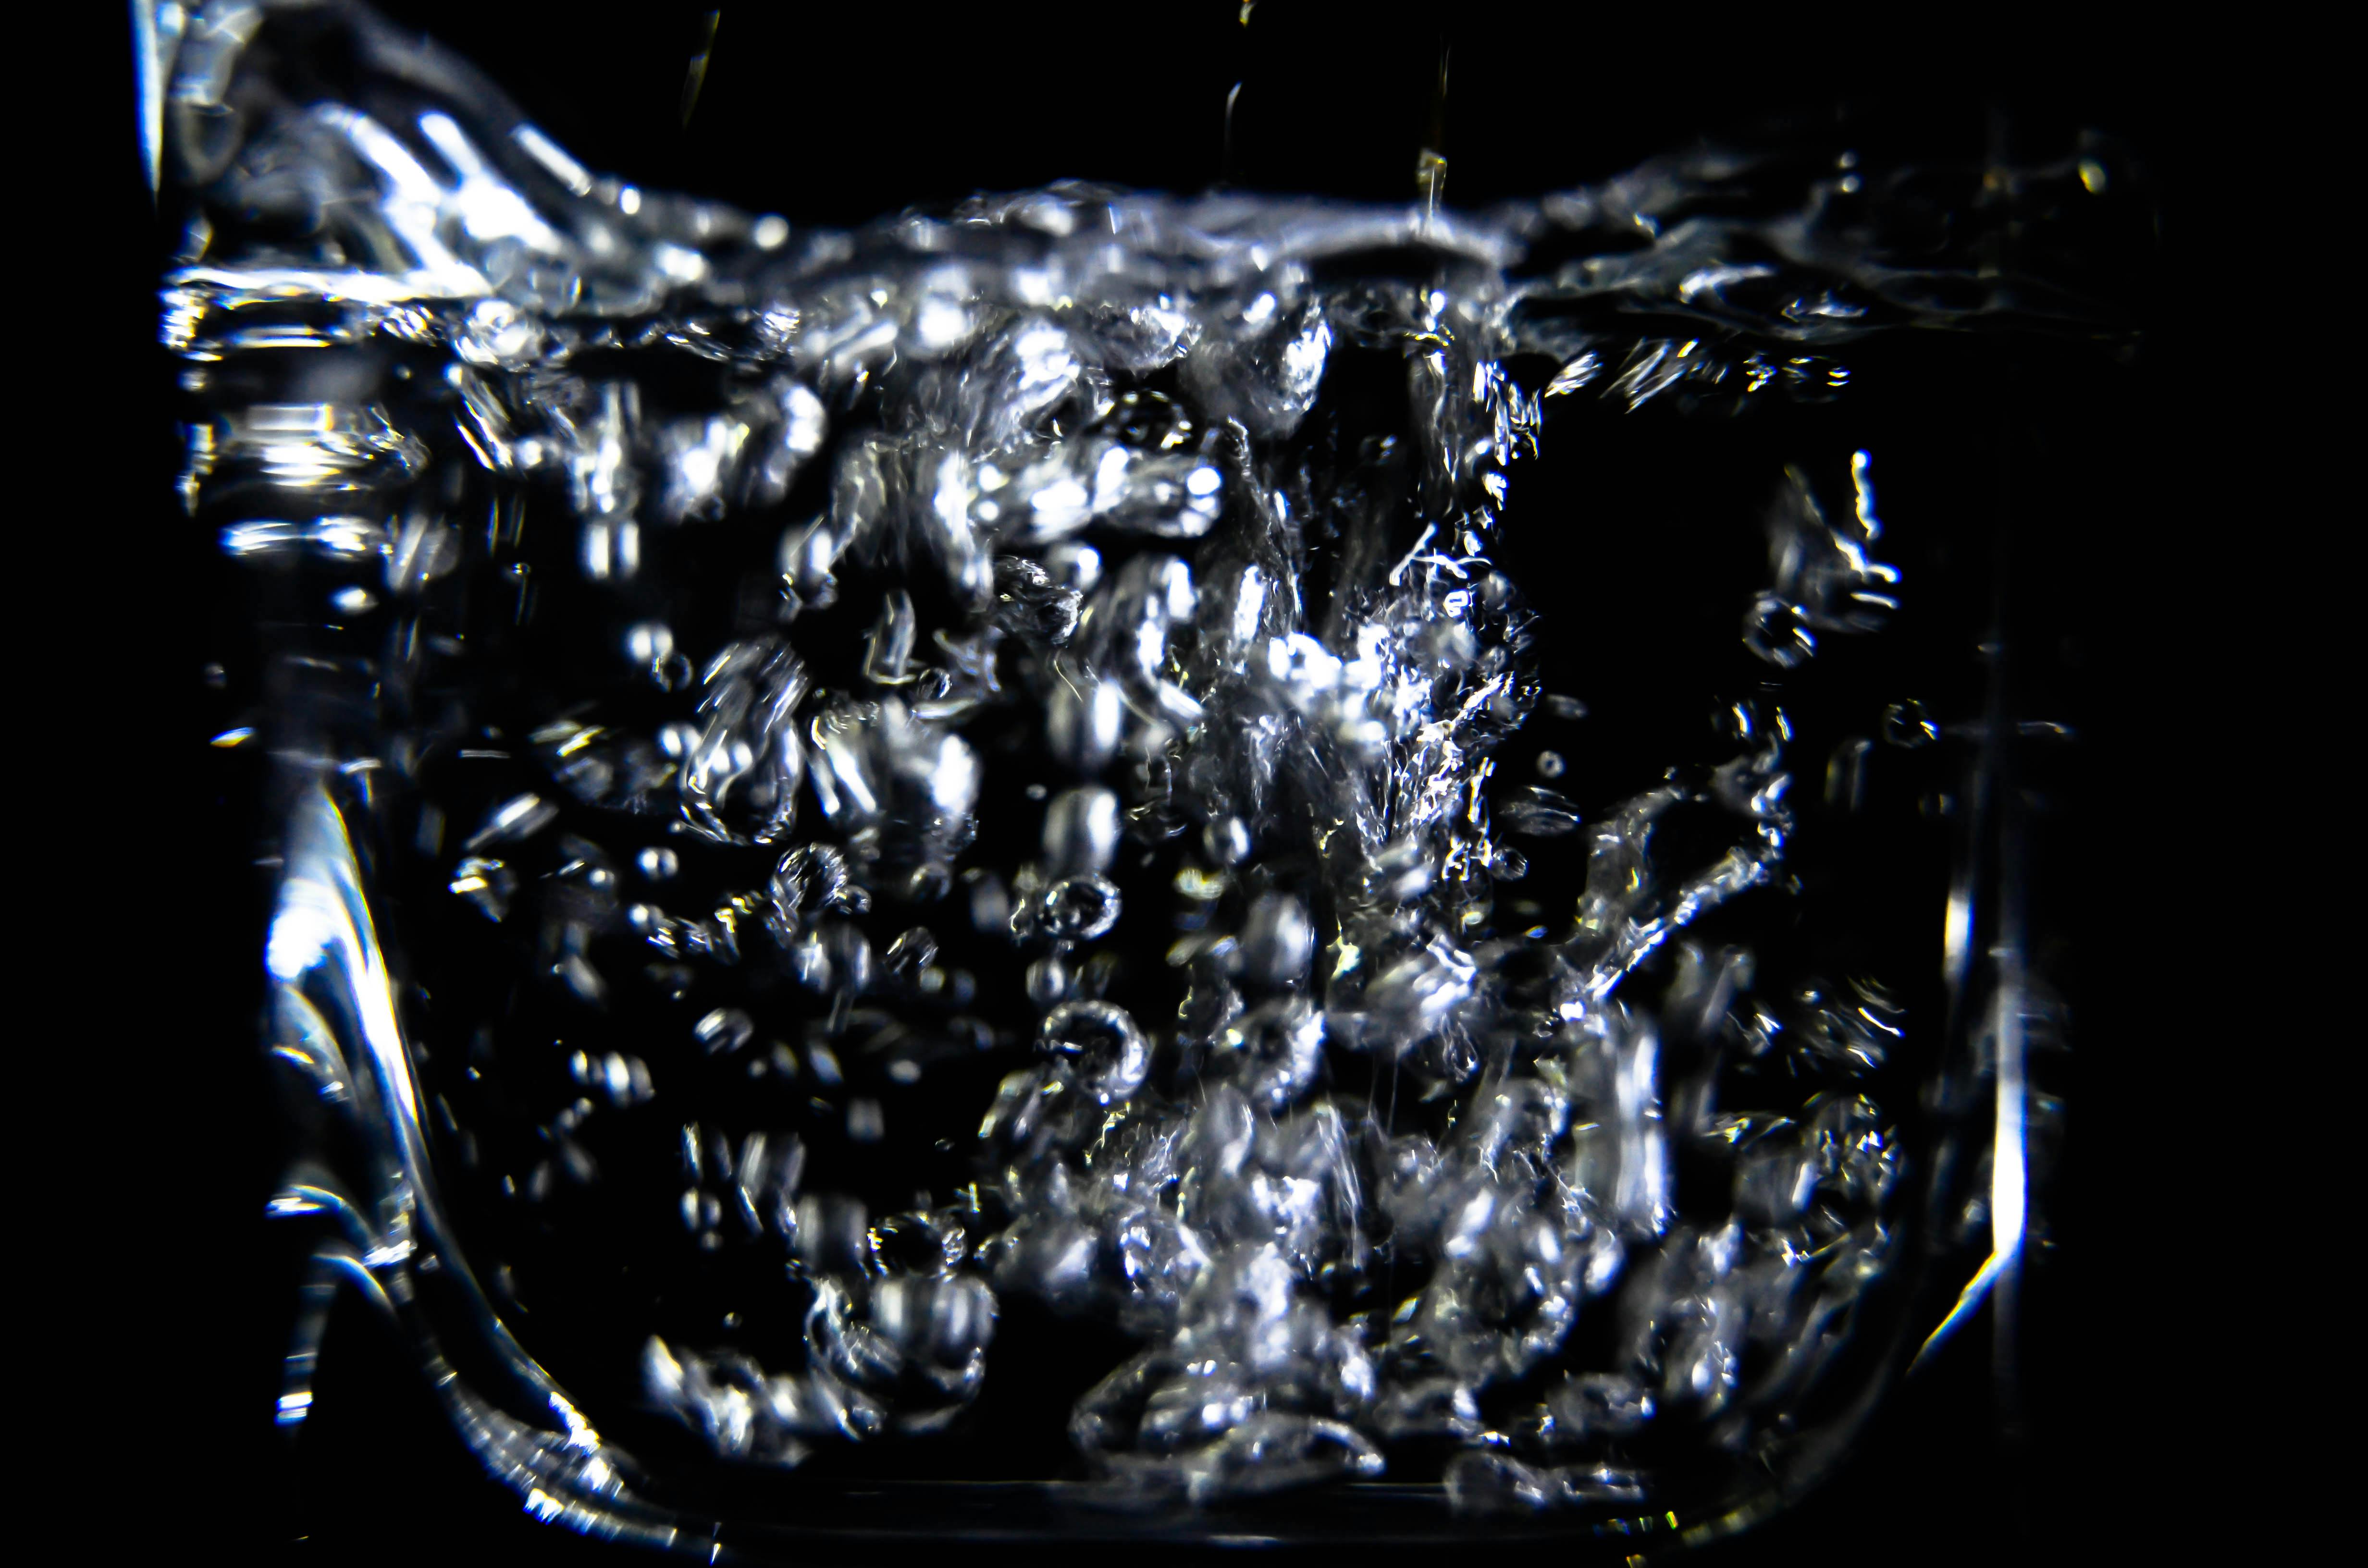 close up of water splashing against black background